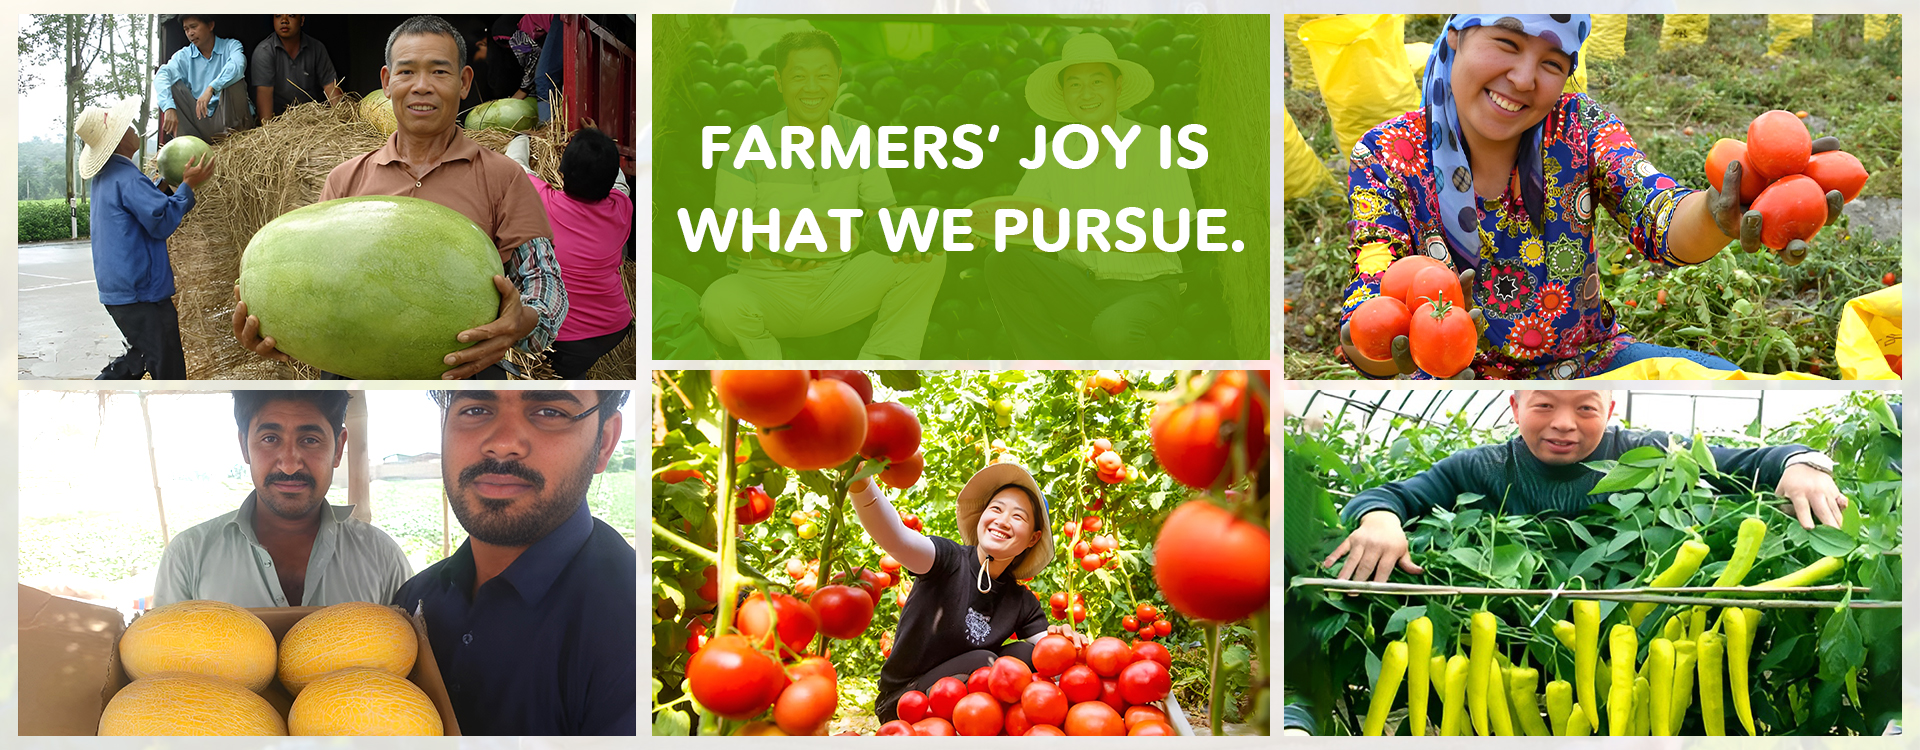 Farmers' joy is what we pursue.